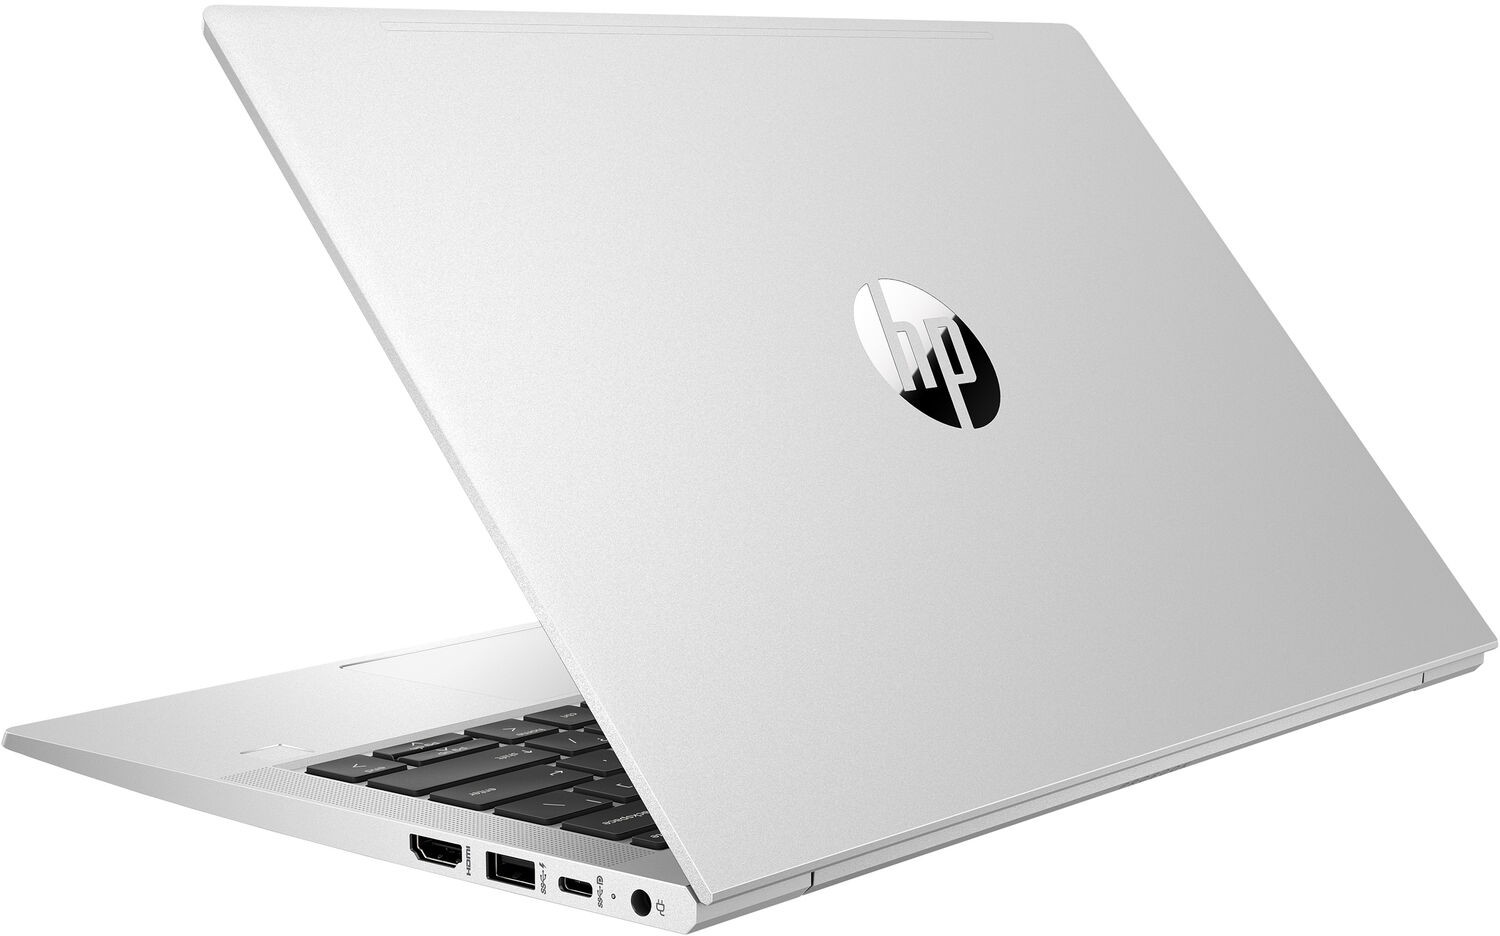 Ноутбук HP НP ProBook 430 G8 Core i7-1165G7 2.8GHz, 13.3 FHD (1920x1080) AG 8GB DDR4 (1),512GB SSD,45Wh LL,Service Door,FPR,1.5kg,1y,Silver,DOS-39392